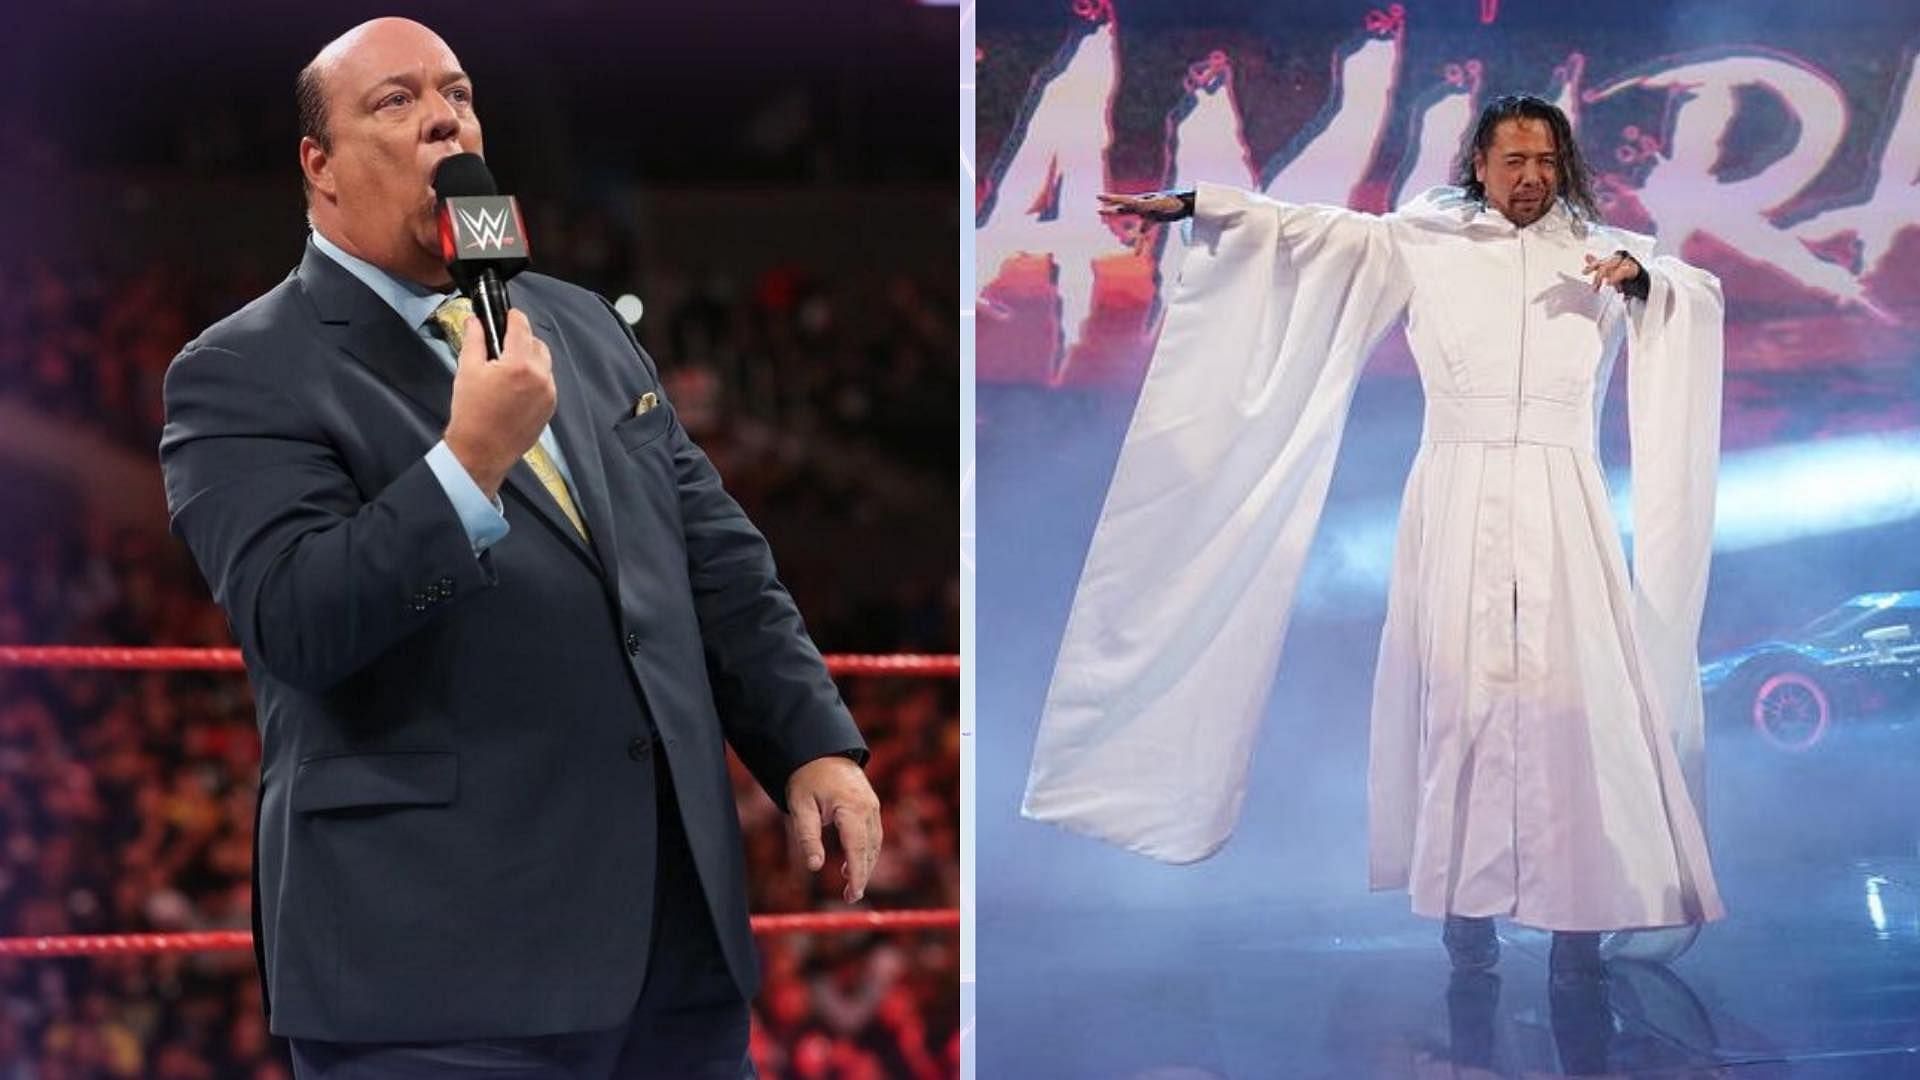 Shinsuke Nakamura has a major match scheduled for WWE RAW